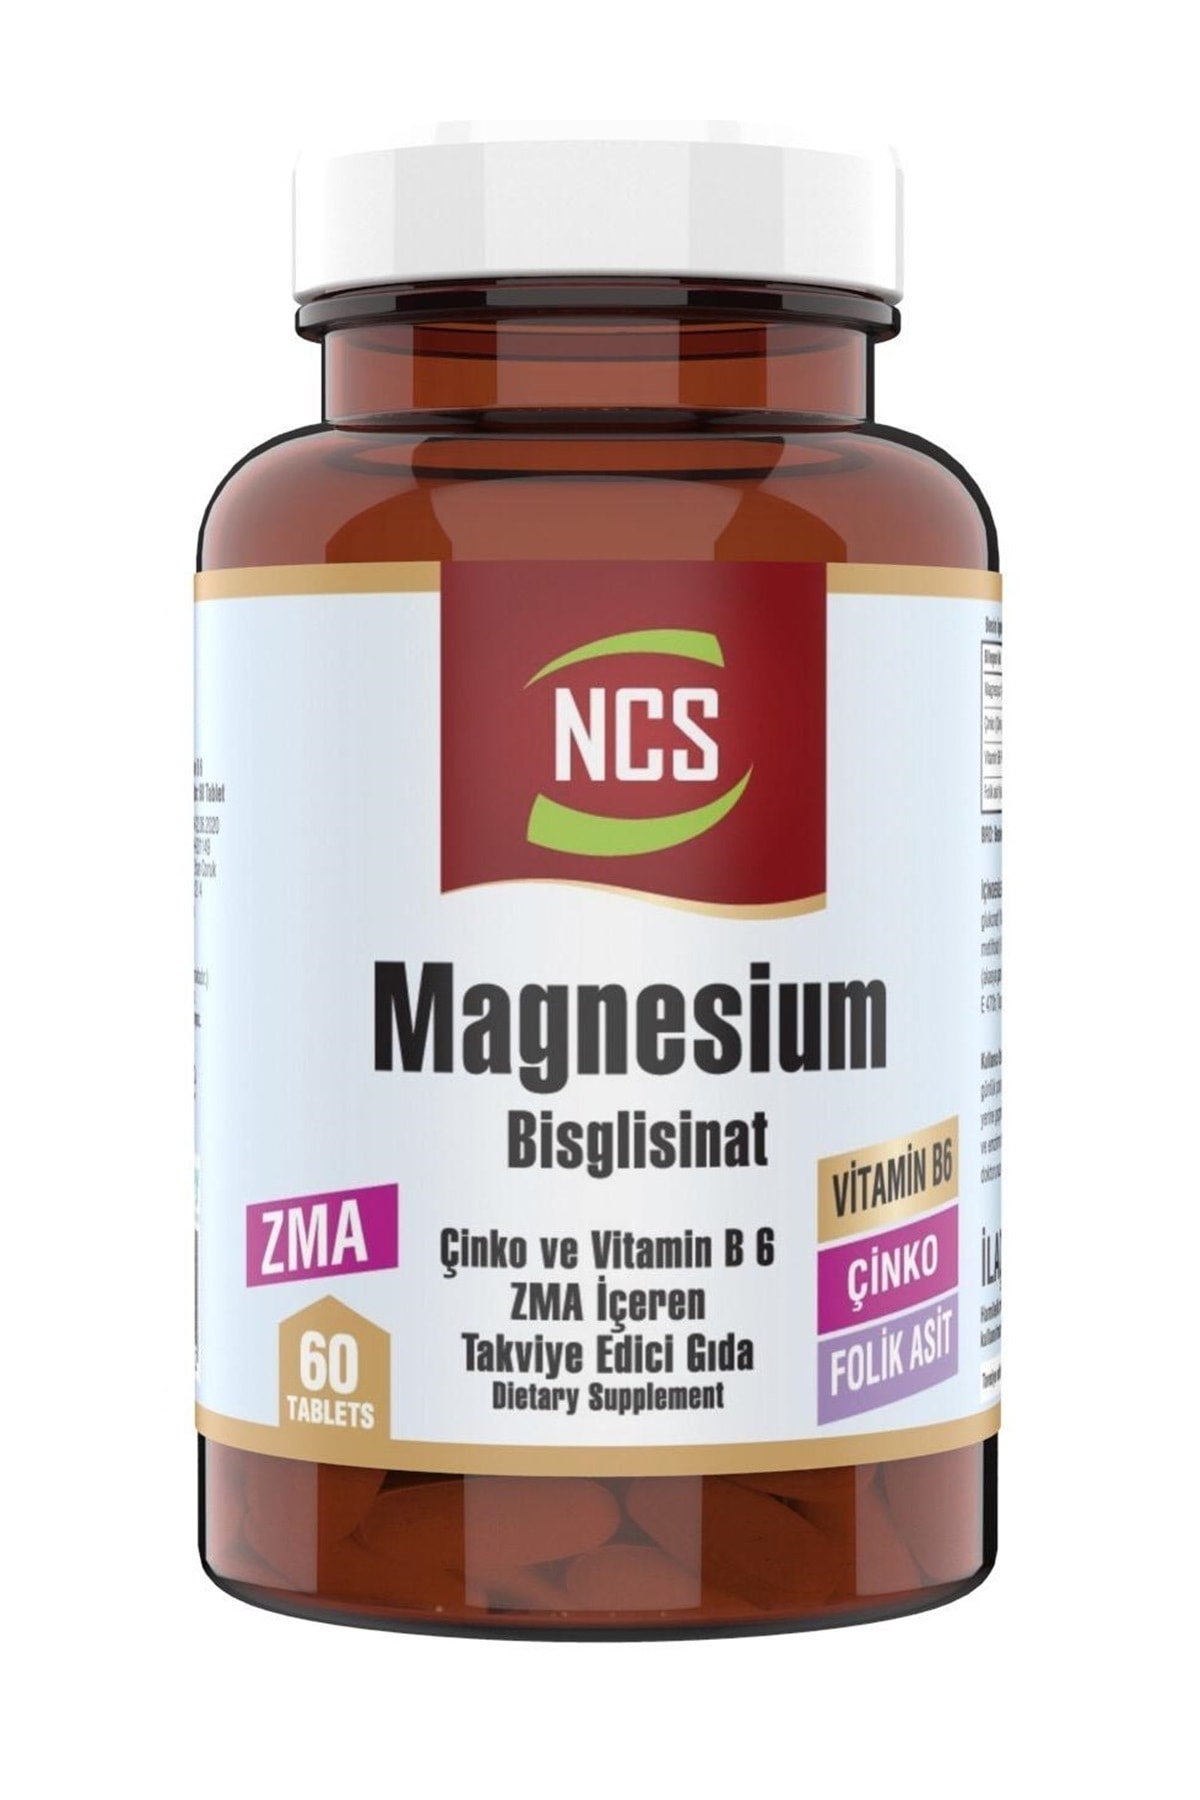 NCS Zma 60 Tablet Çinko Folic Acid Vitamin B 6 Magnezyum Bisglisinat